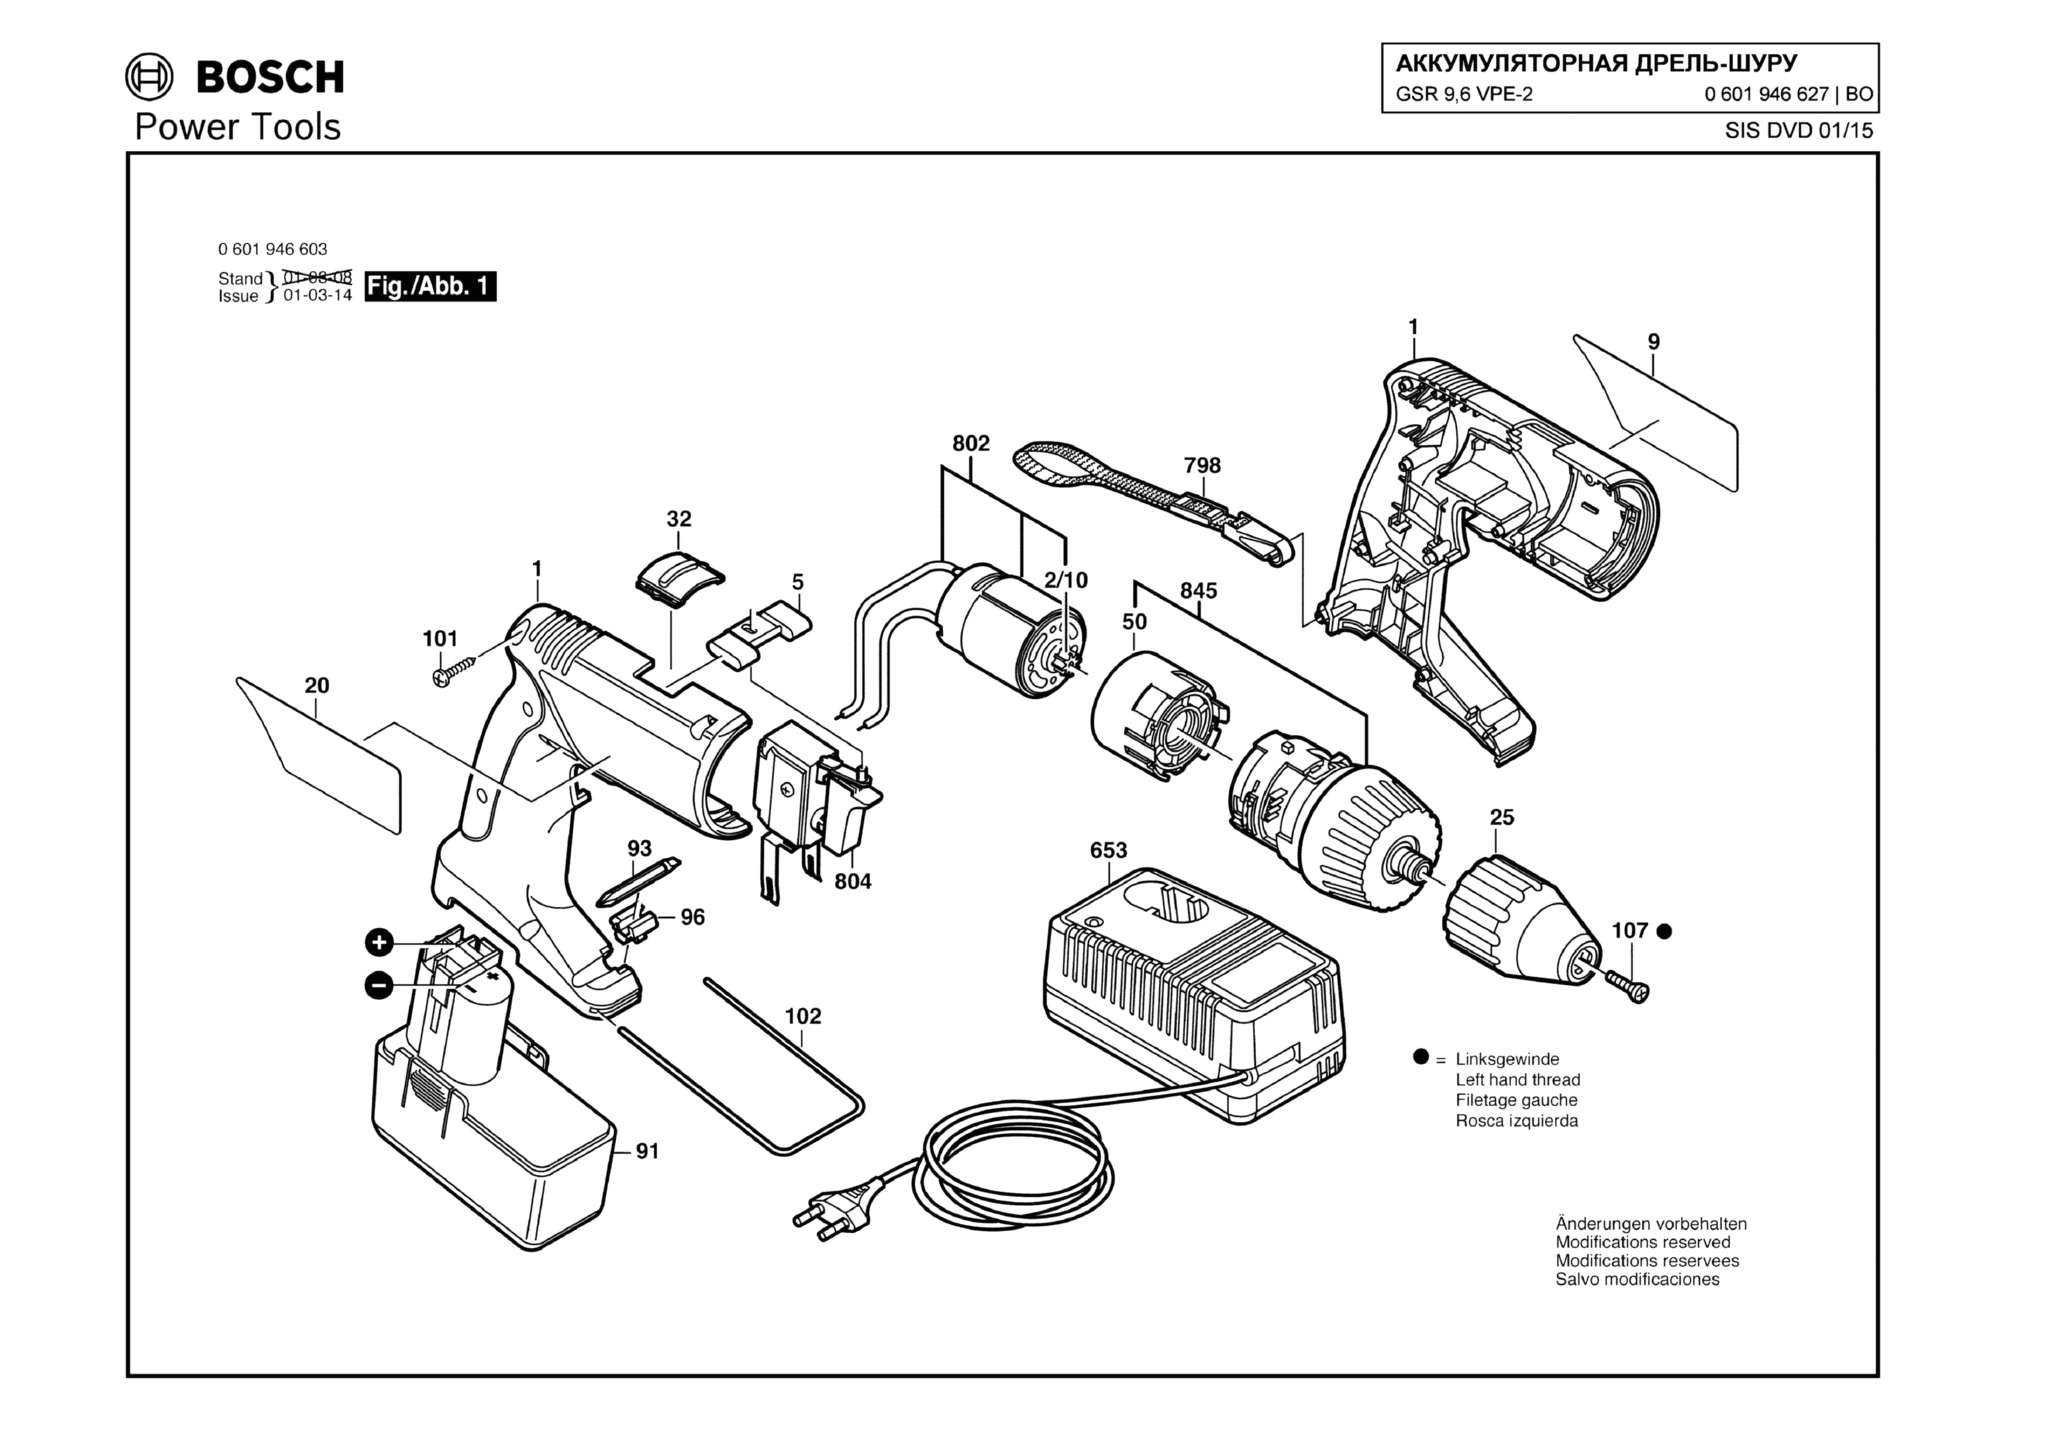 Запчасти, схема и деталировка Bosch GSR 9,6 VPE-2 (ТИП 0601946627)